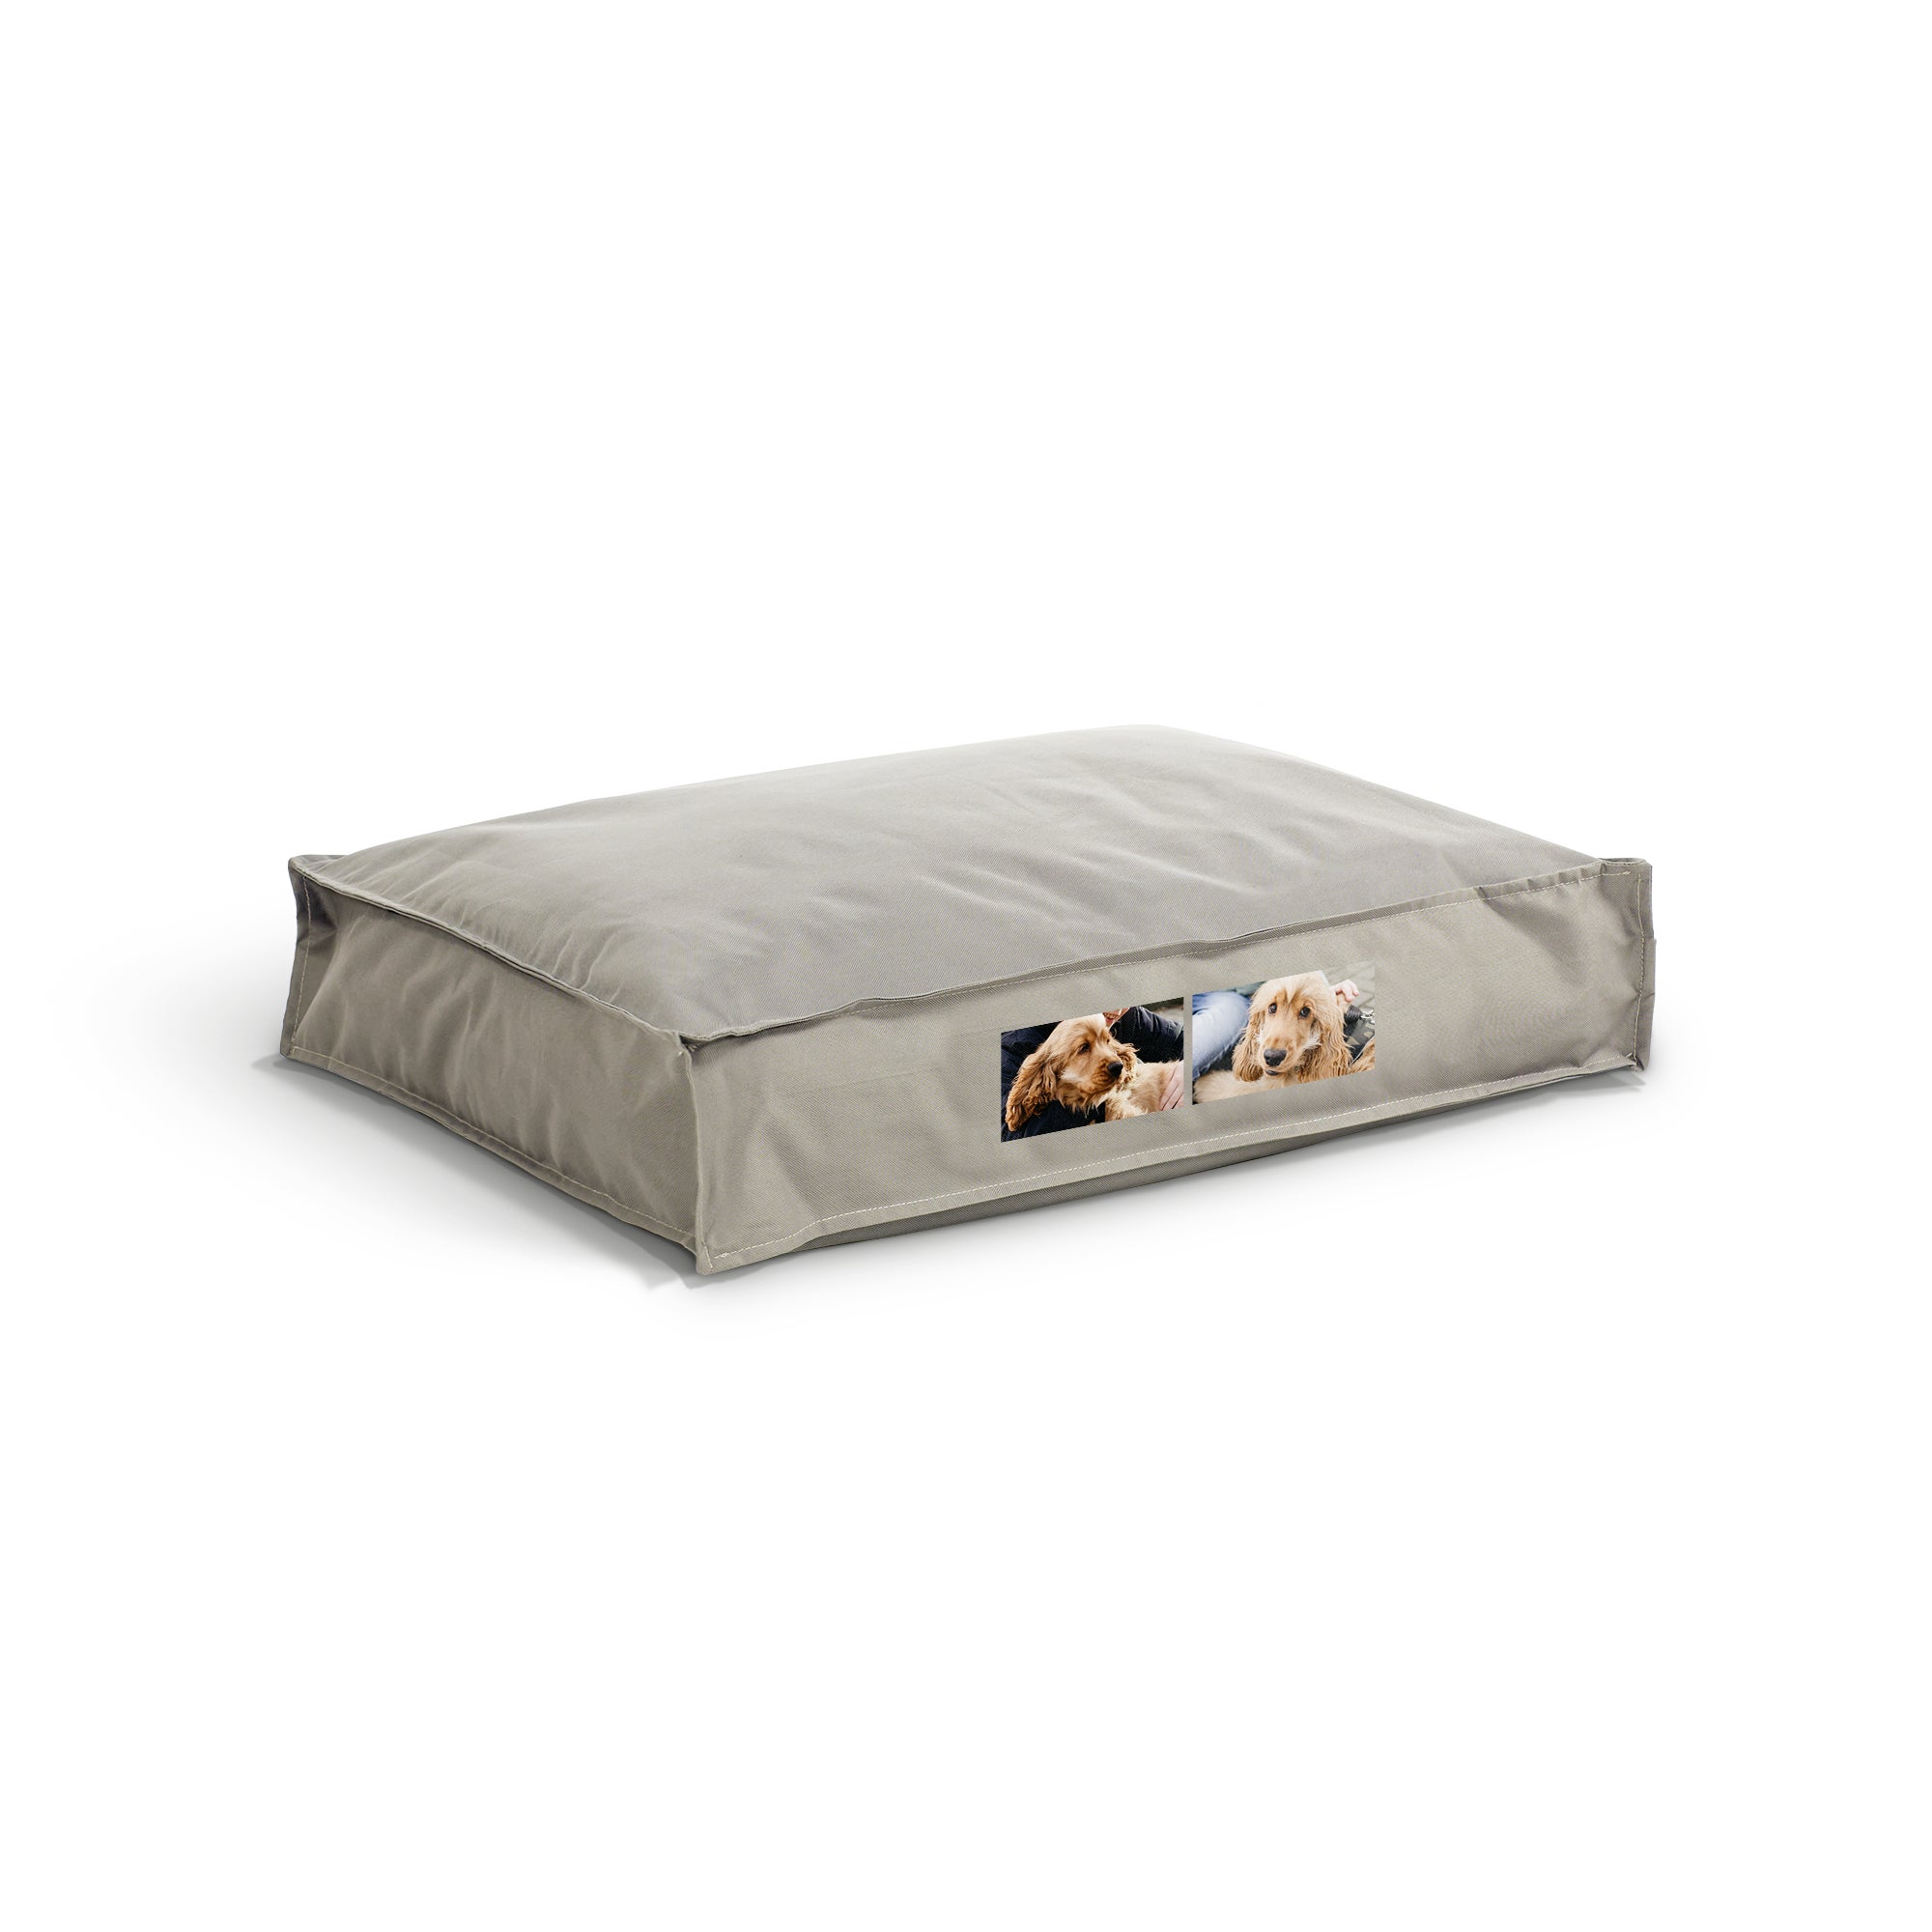 Personalised dog bed - Taupe - Medium